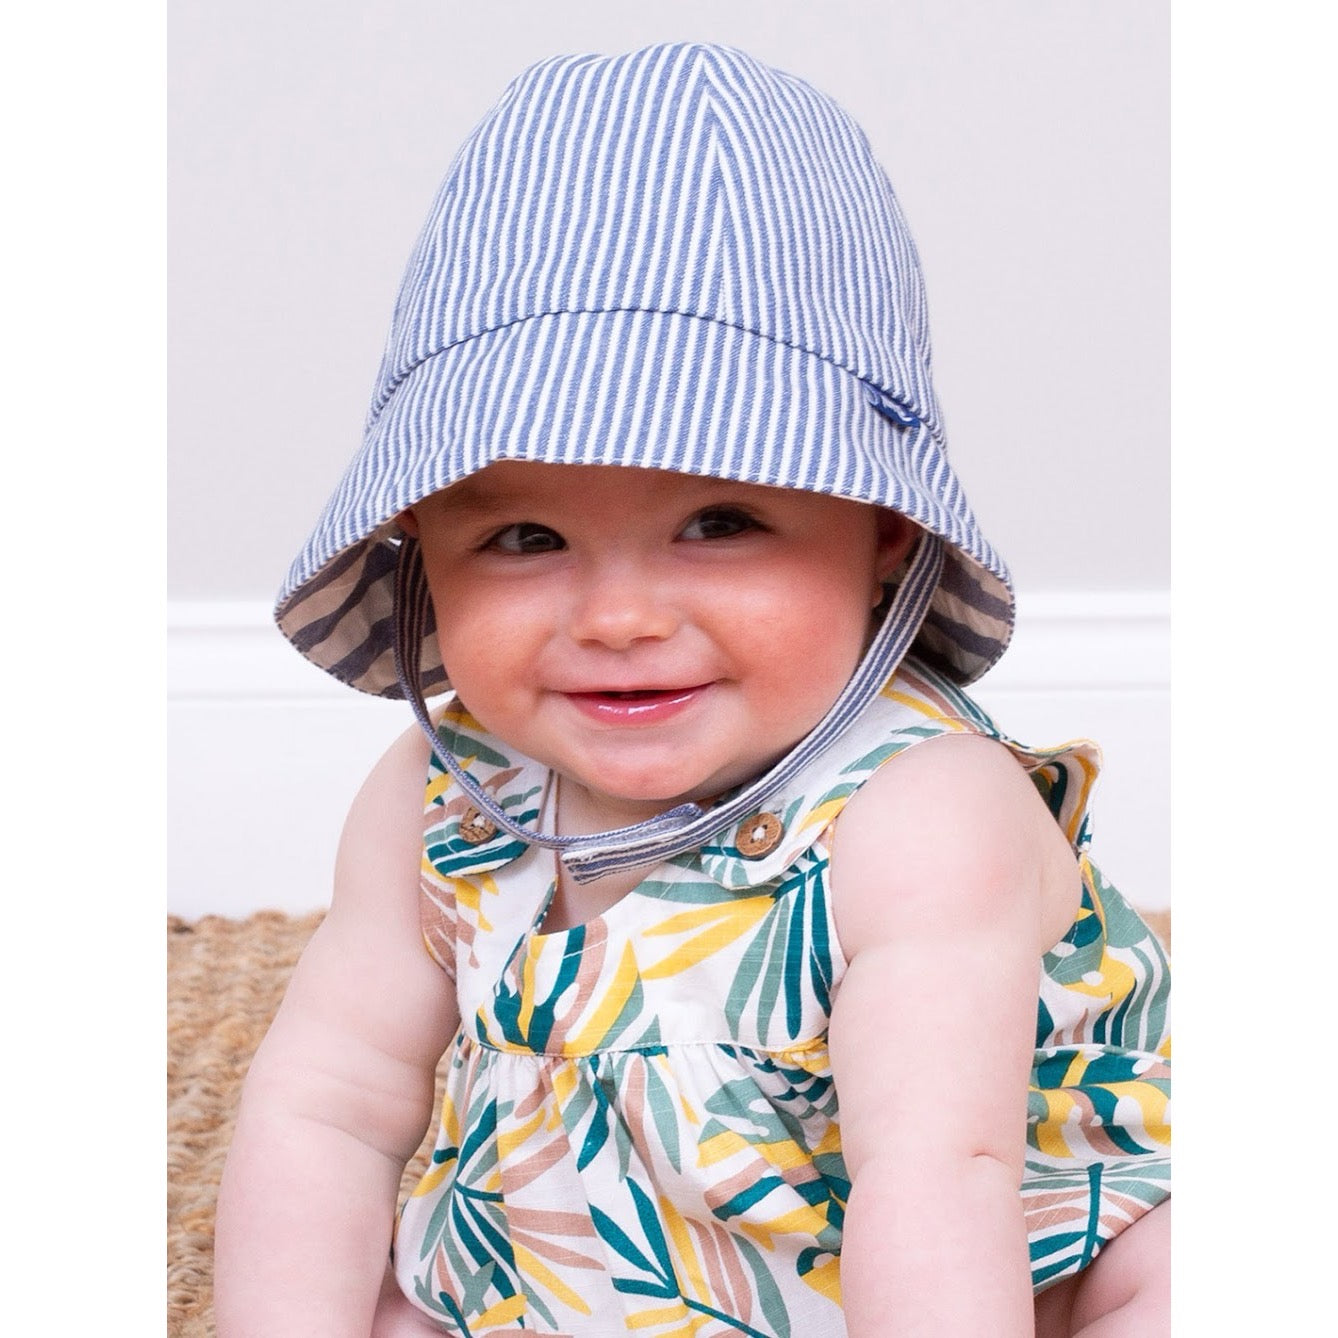 Kite Classic Baby Reversible Sun Hat 3022 Clothing 0-6M / Blue,6-12M / Blue,12-24M / Blue